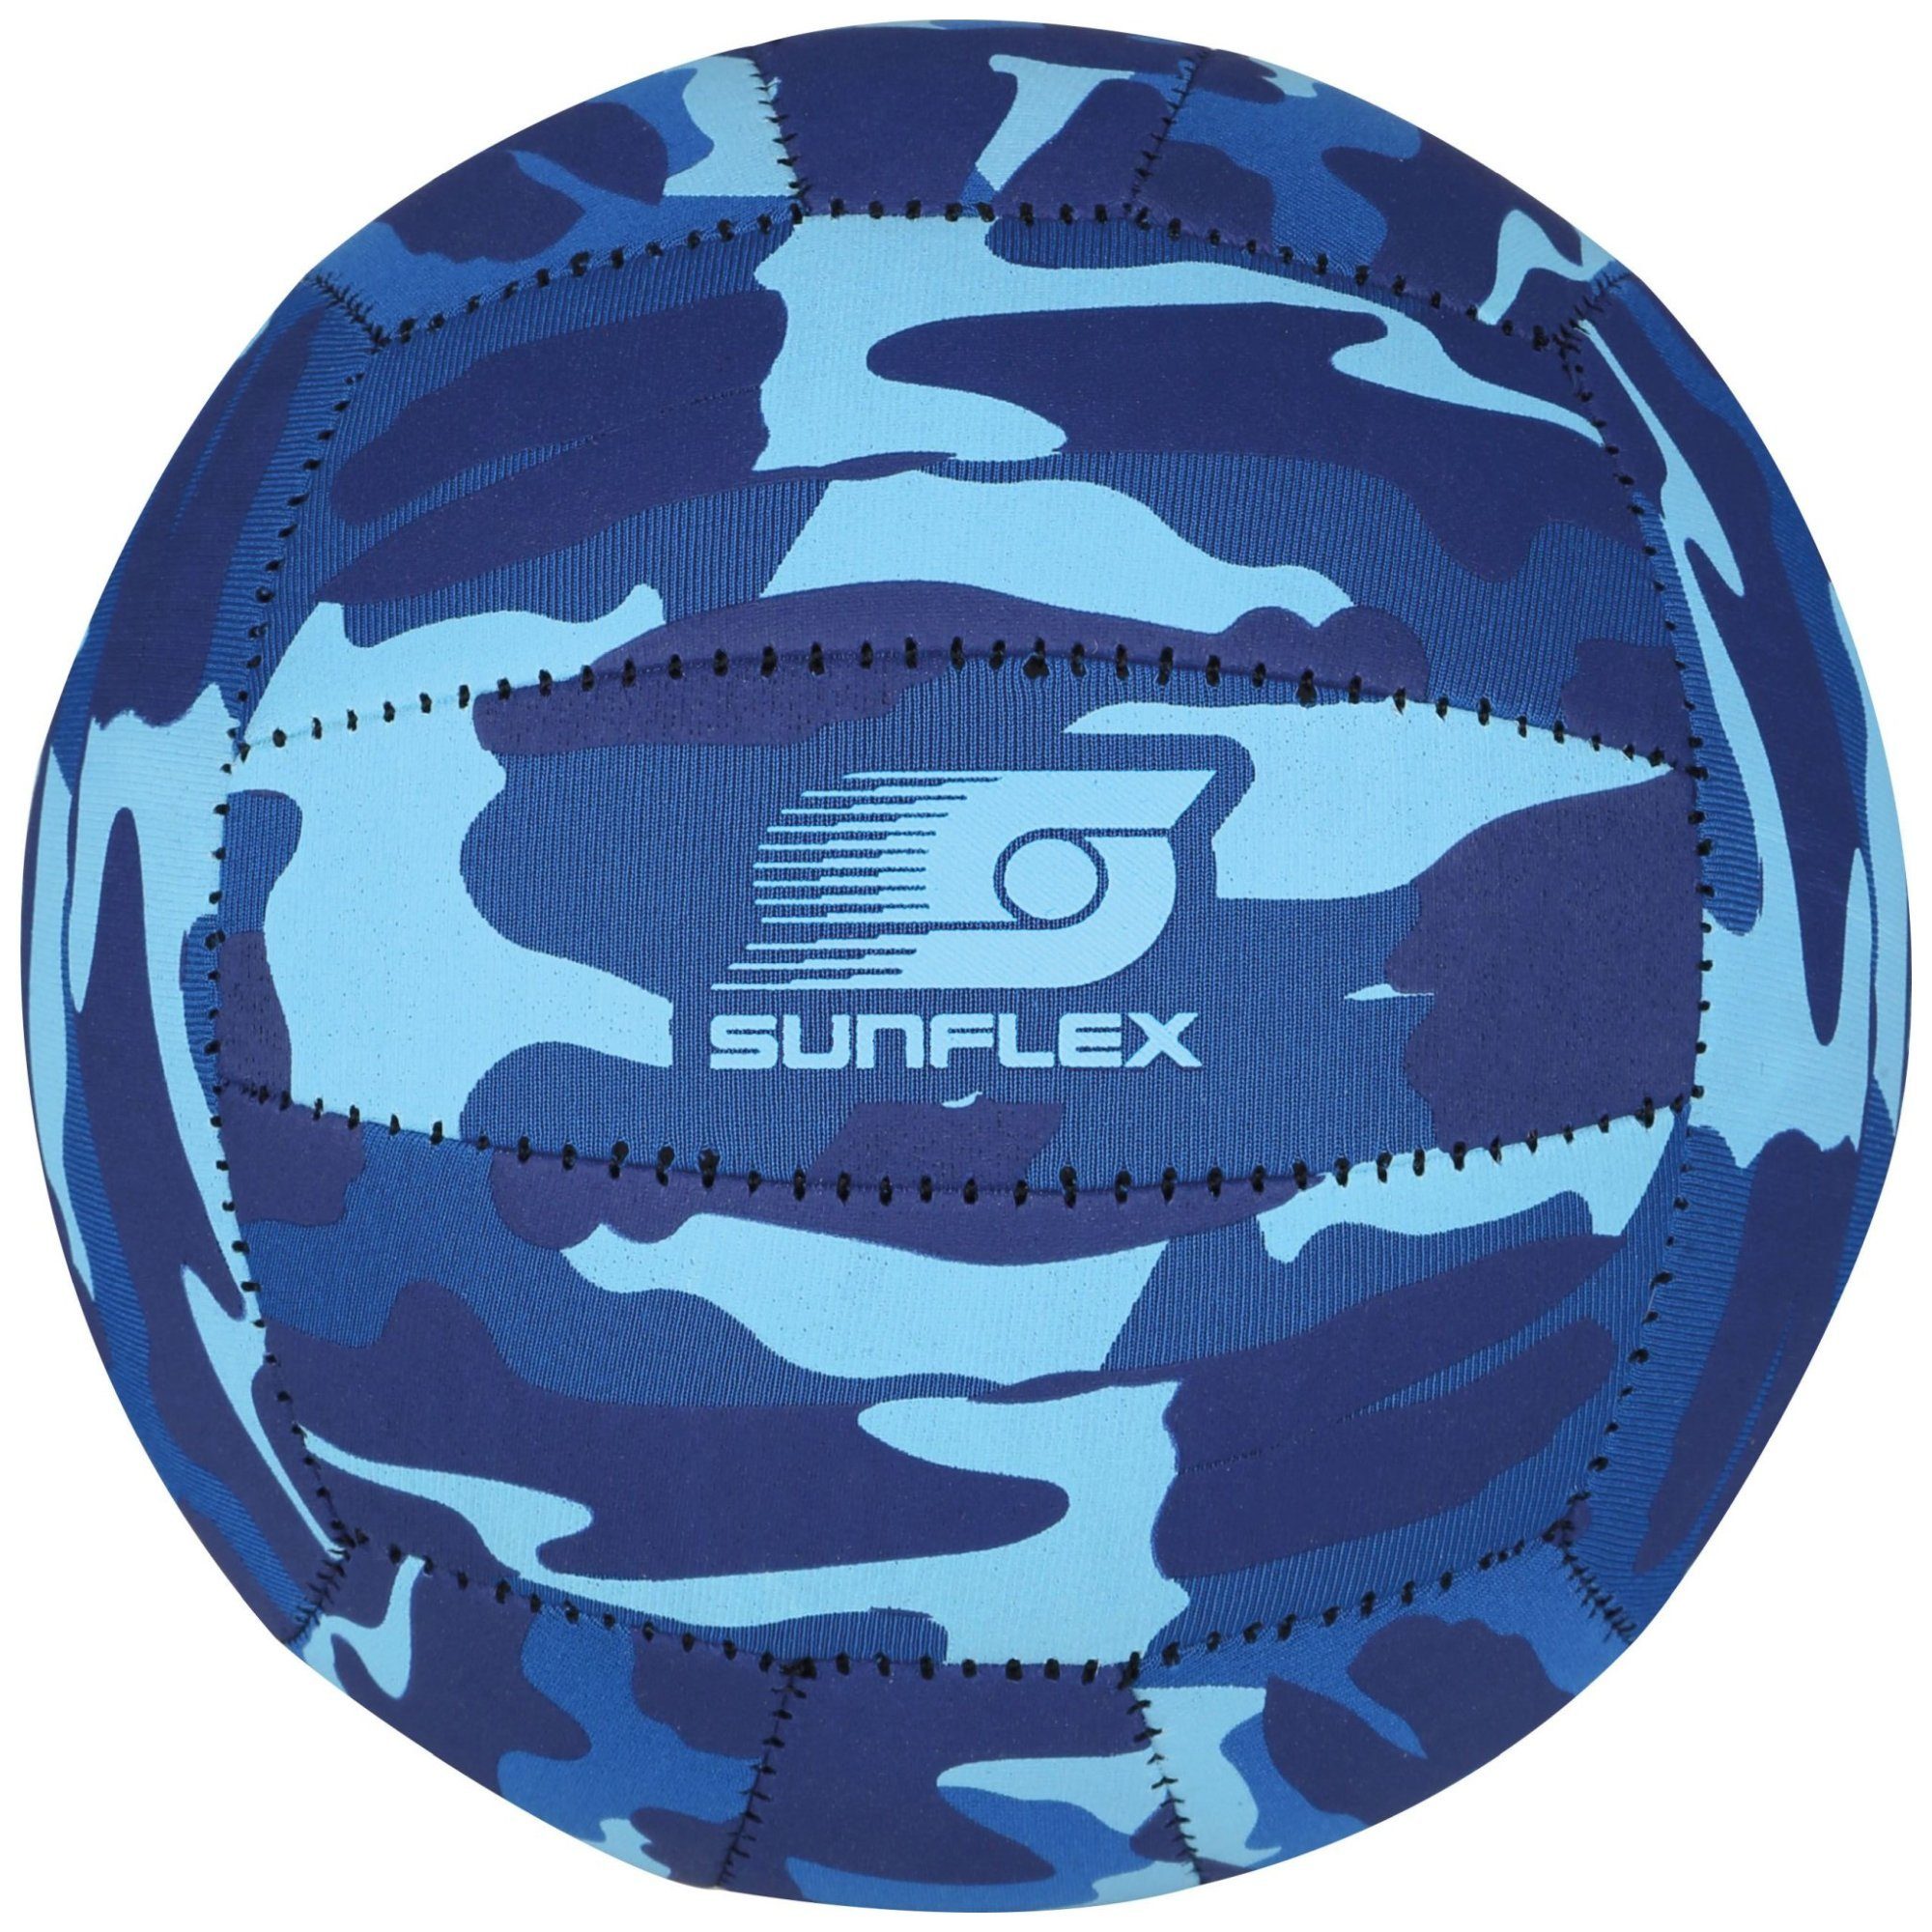 Sunflex Beachsoccerball sunflex Beach- Funball blau 3 Camo Size und